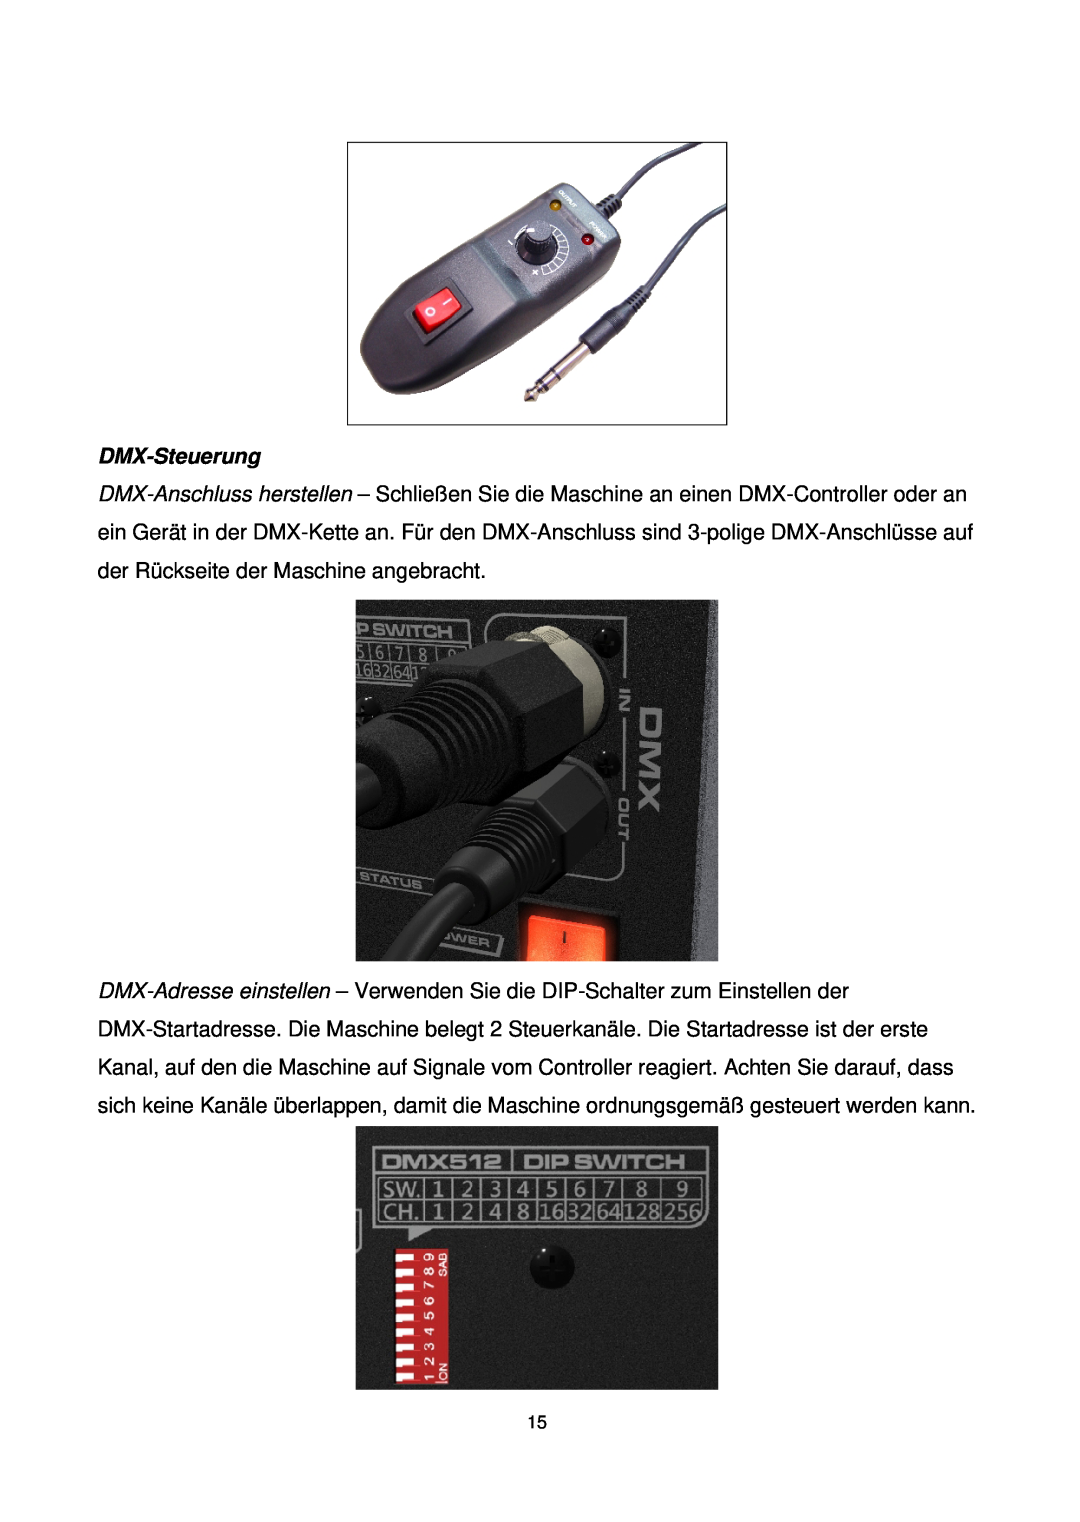 Antari Lighting and Effects Z-350 user manual DMX-Steuerung 